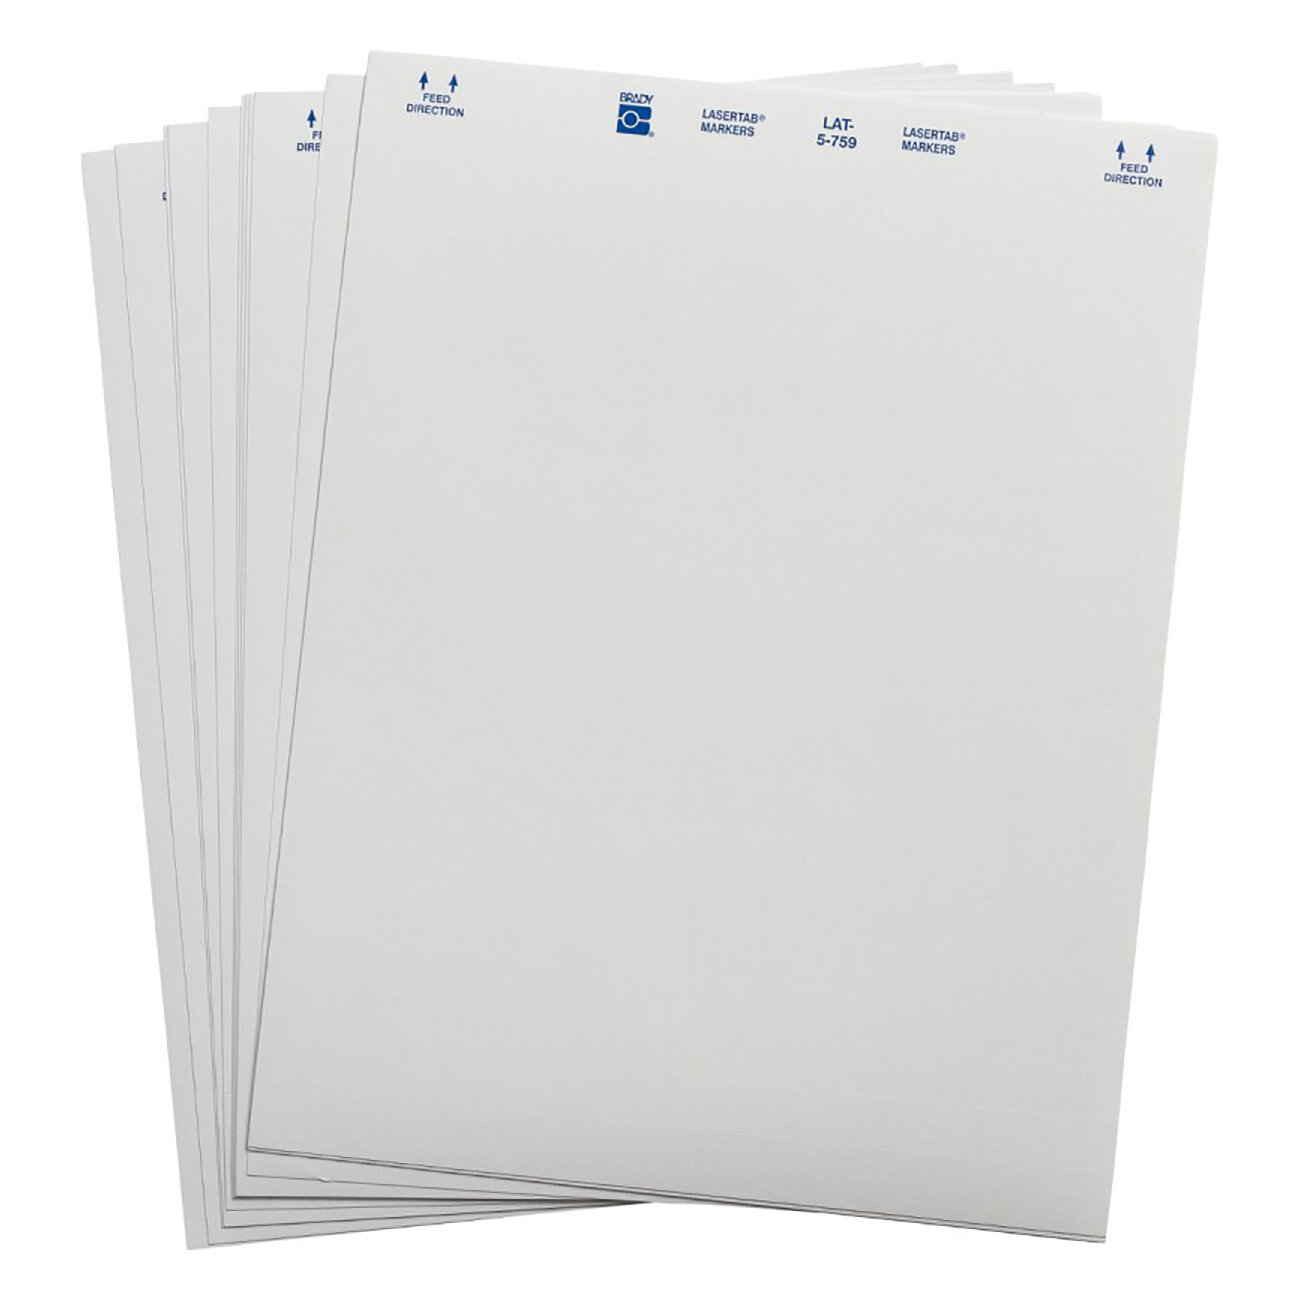 Бумажные этикетки Brady LAT-5-759-10 на листах А4, 20.32 х 12.7 мм, белые {brd29752}